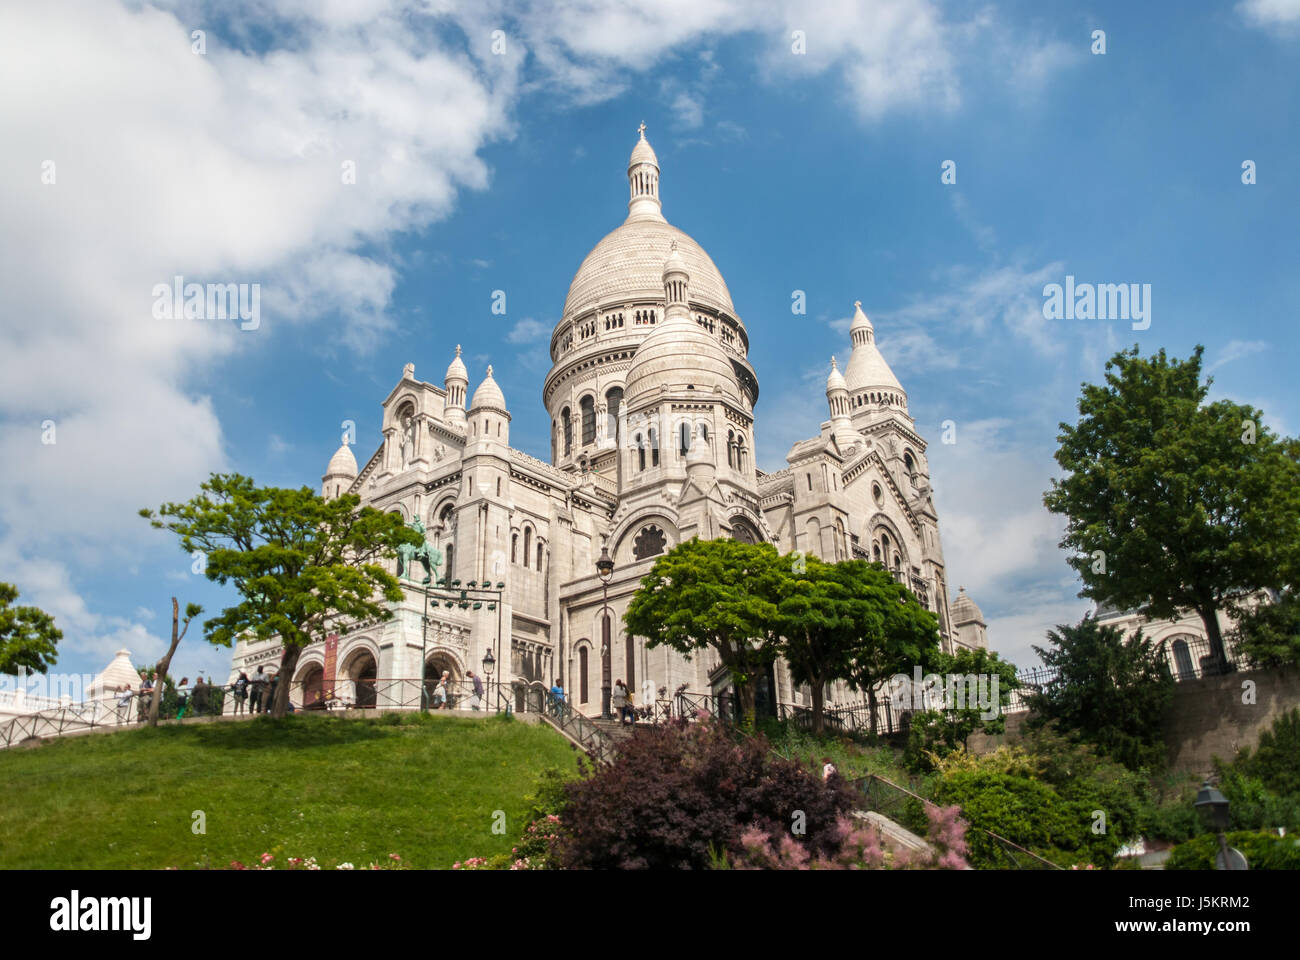 Sacre Coeur Paris Basilika Church White Stone Hill Nature And Sky Stock Photo Alamy